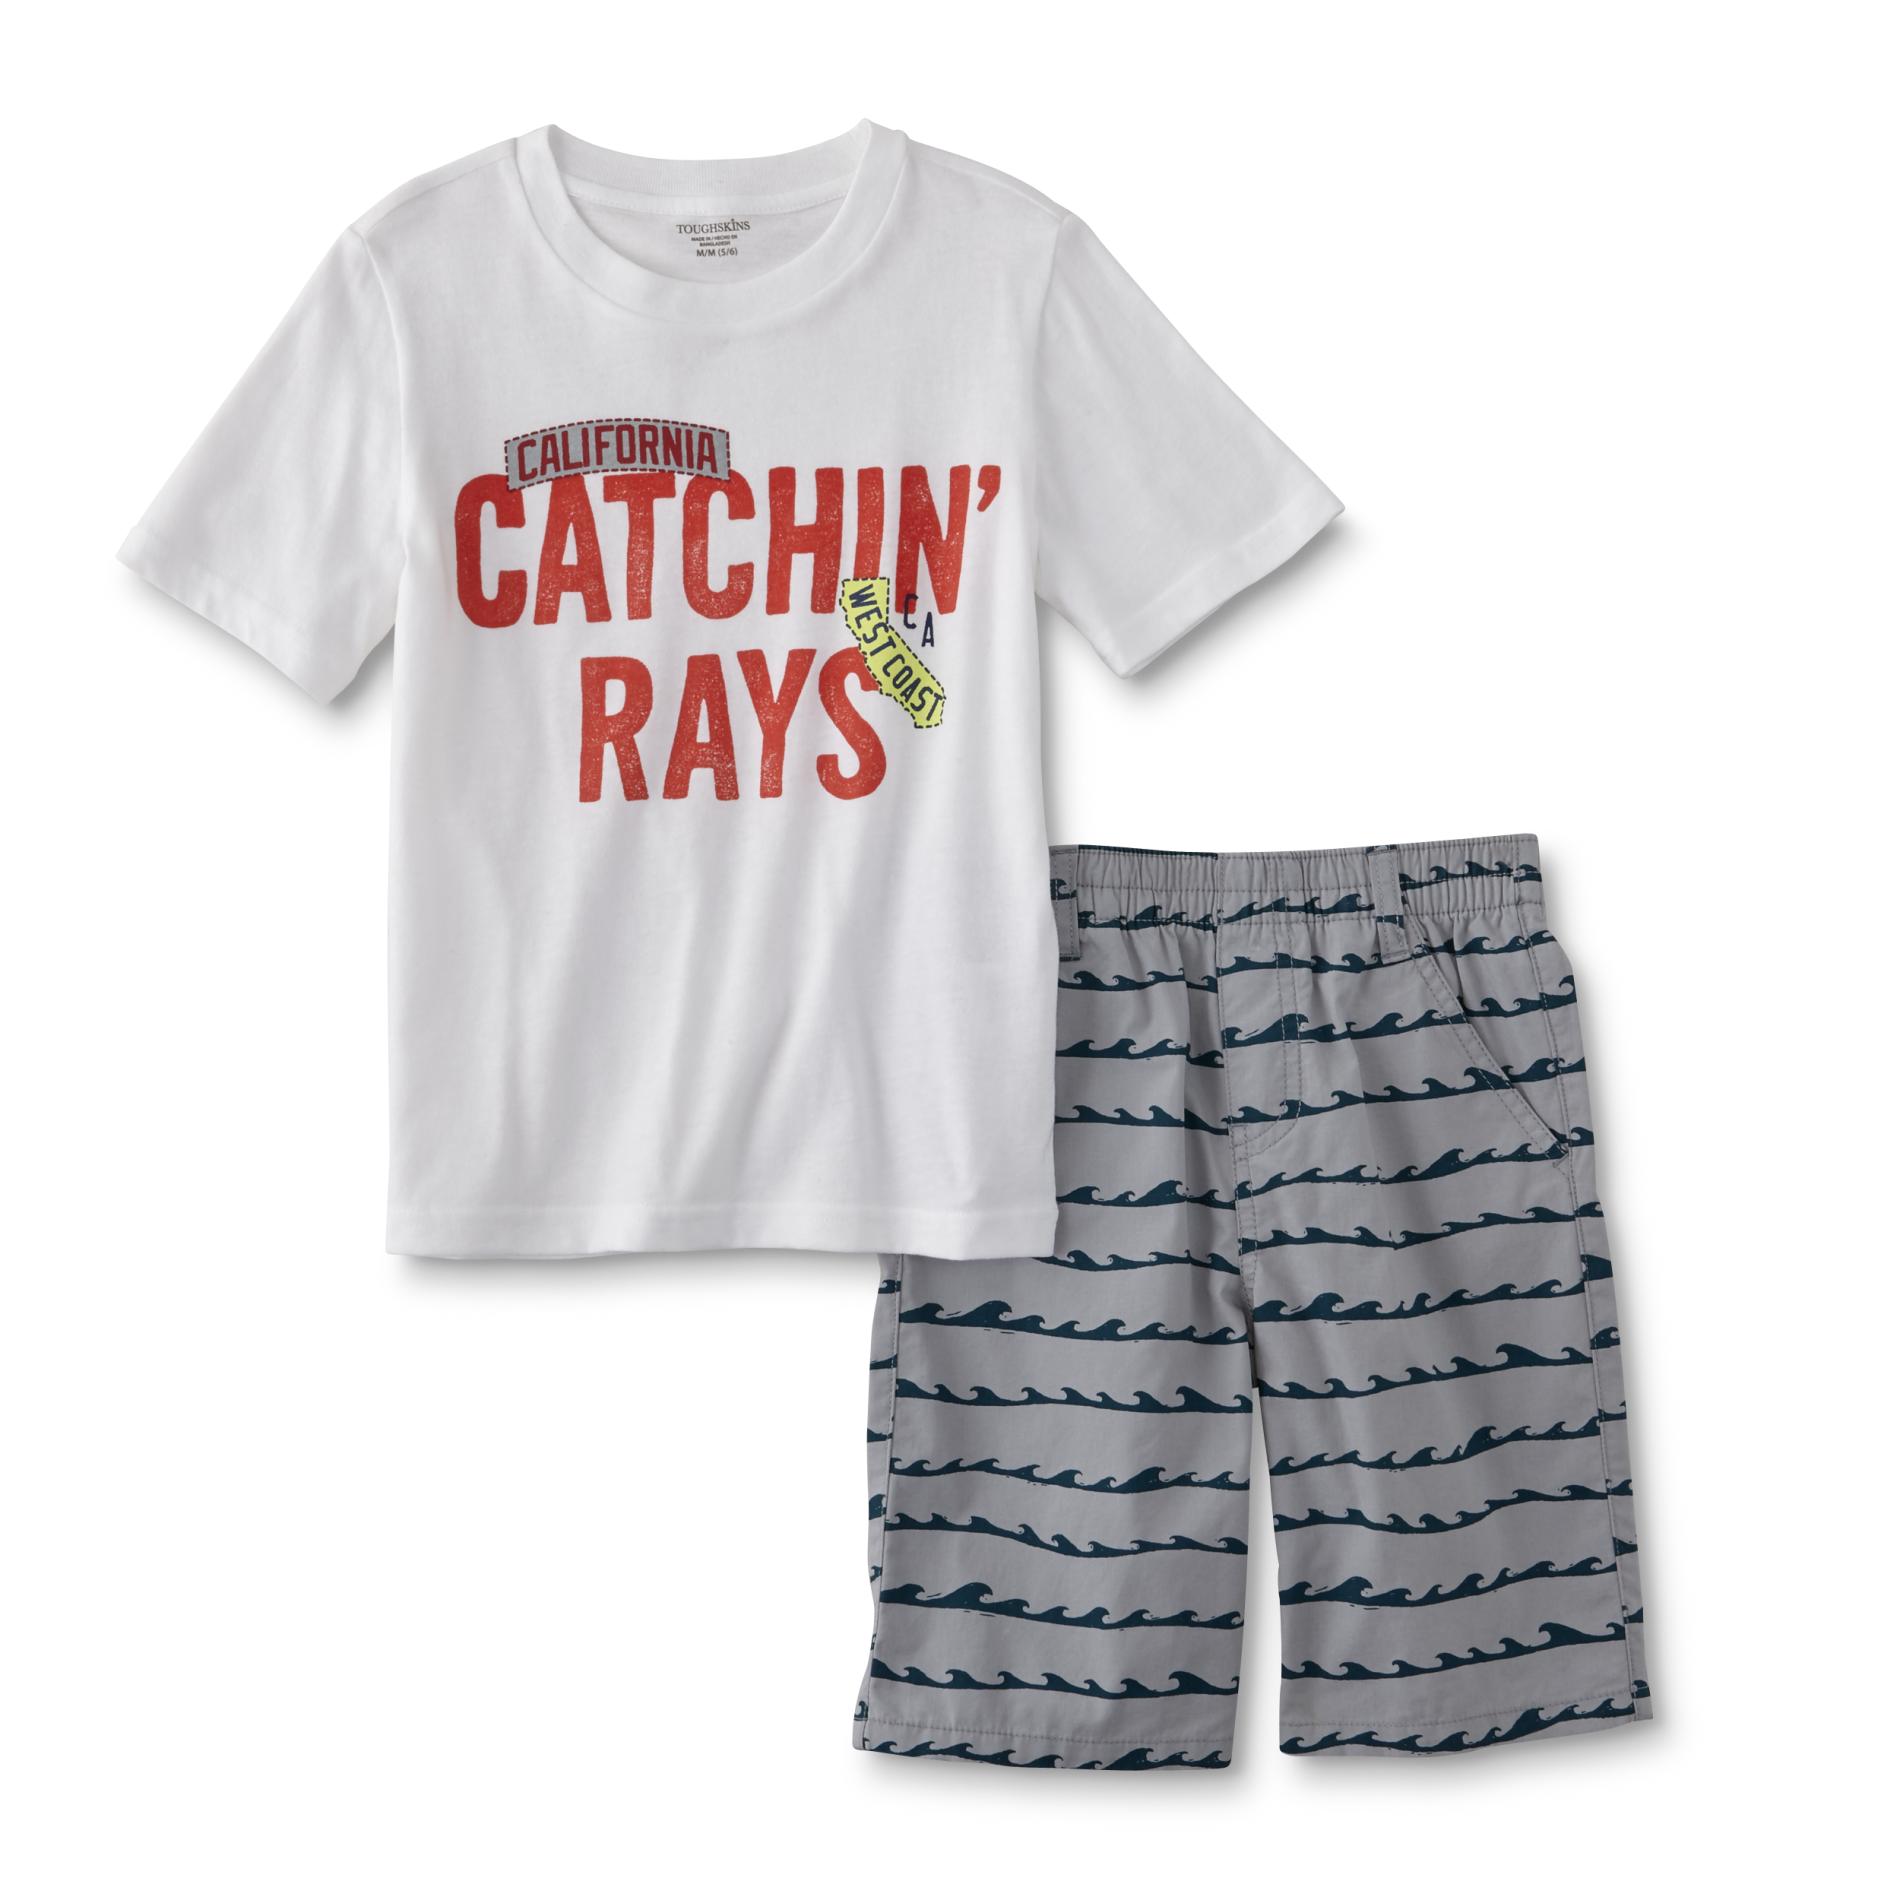 Toughskins Boys' Graphic T-Shirt & Shorts - Catchin' Rays